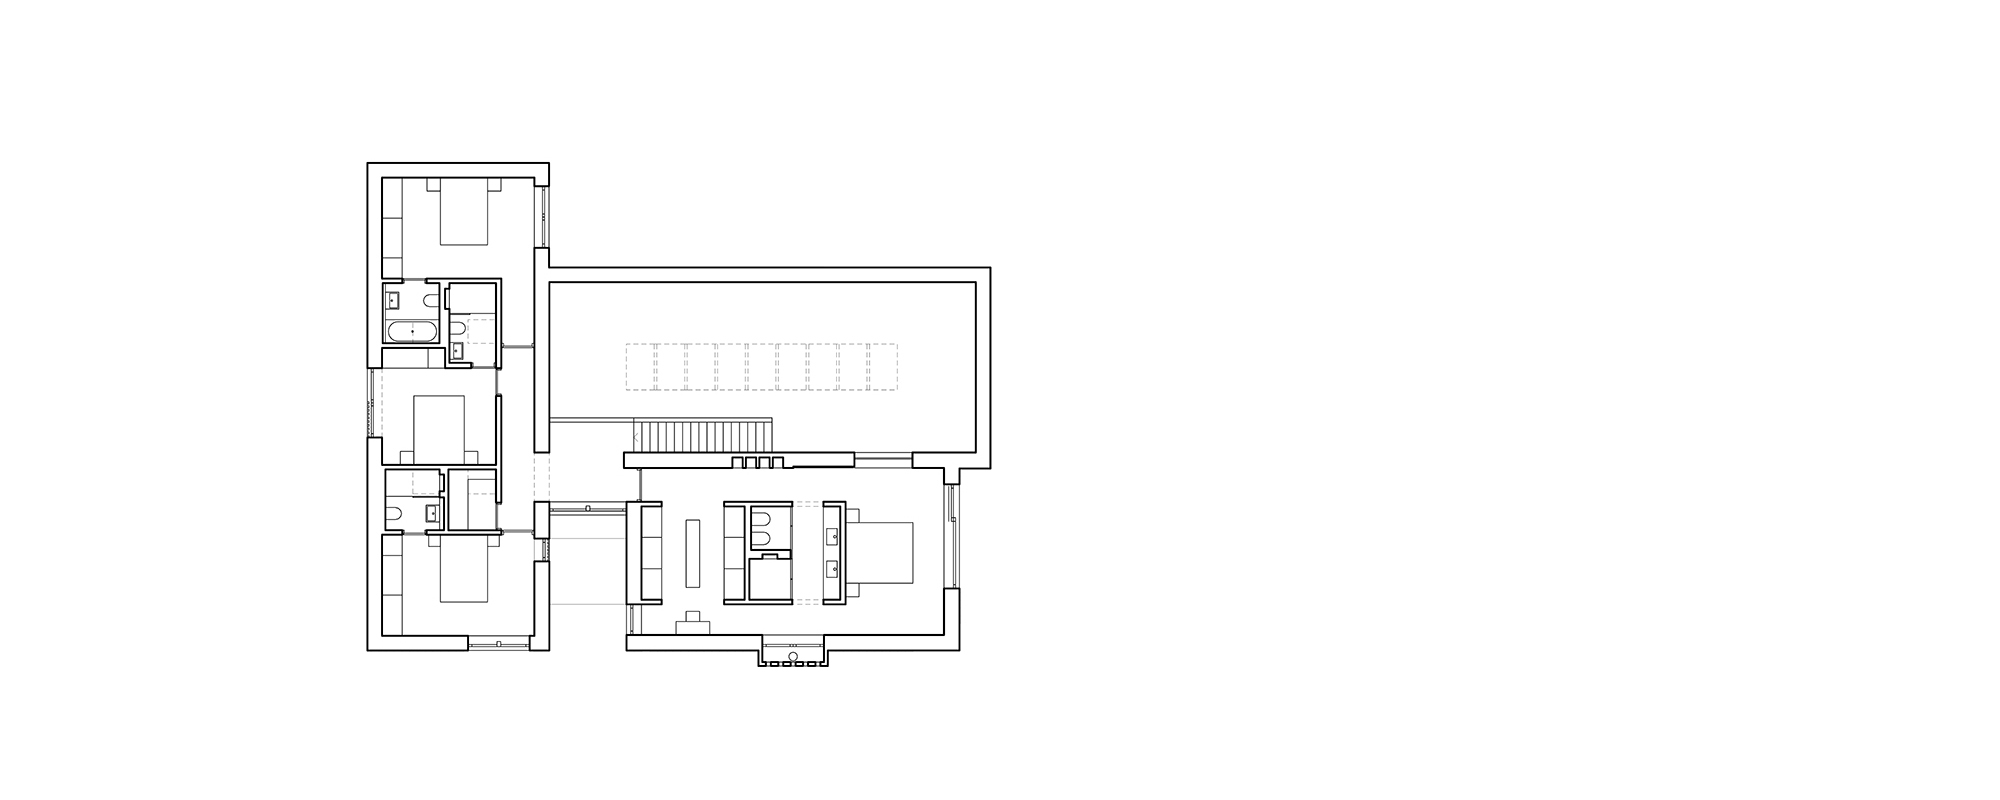 Erbar Mattes Architects Wimbledon custom new build contemporary modern house villa conservation area first floor plan